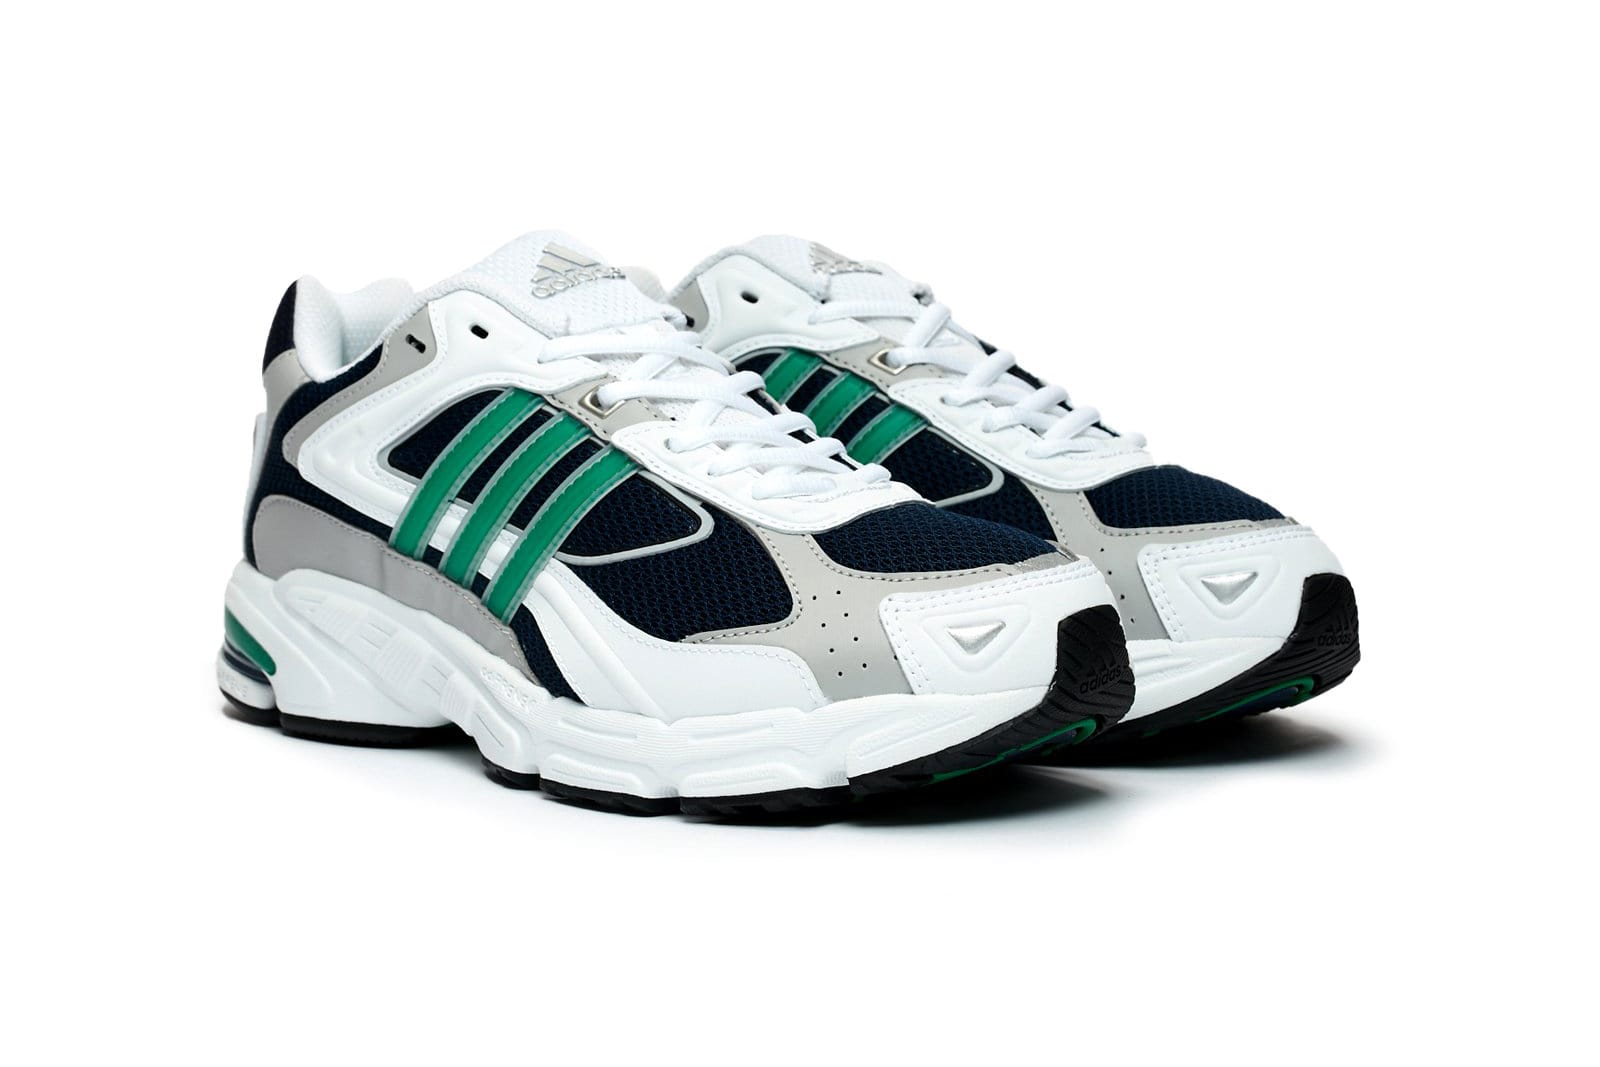 Buy Adidas Response CL - Men's Shoes online | Foot Locker UAE